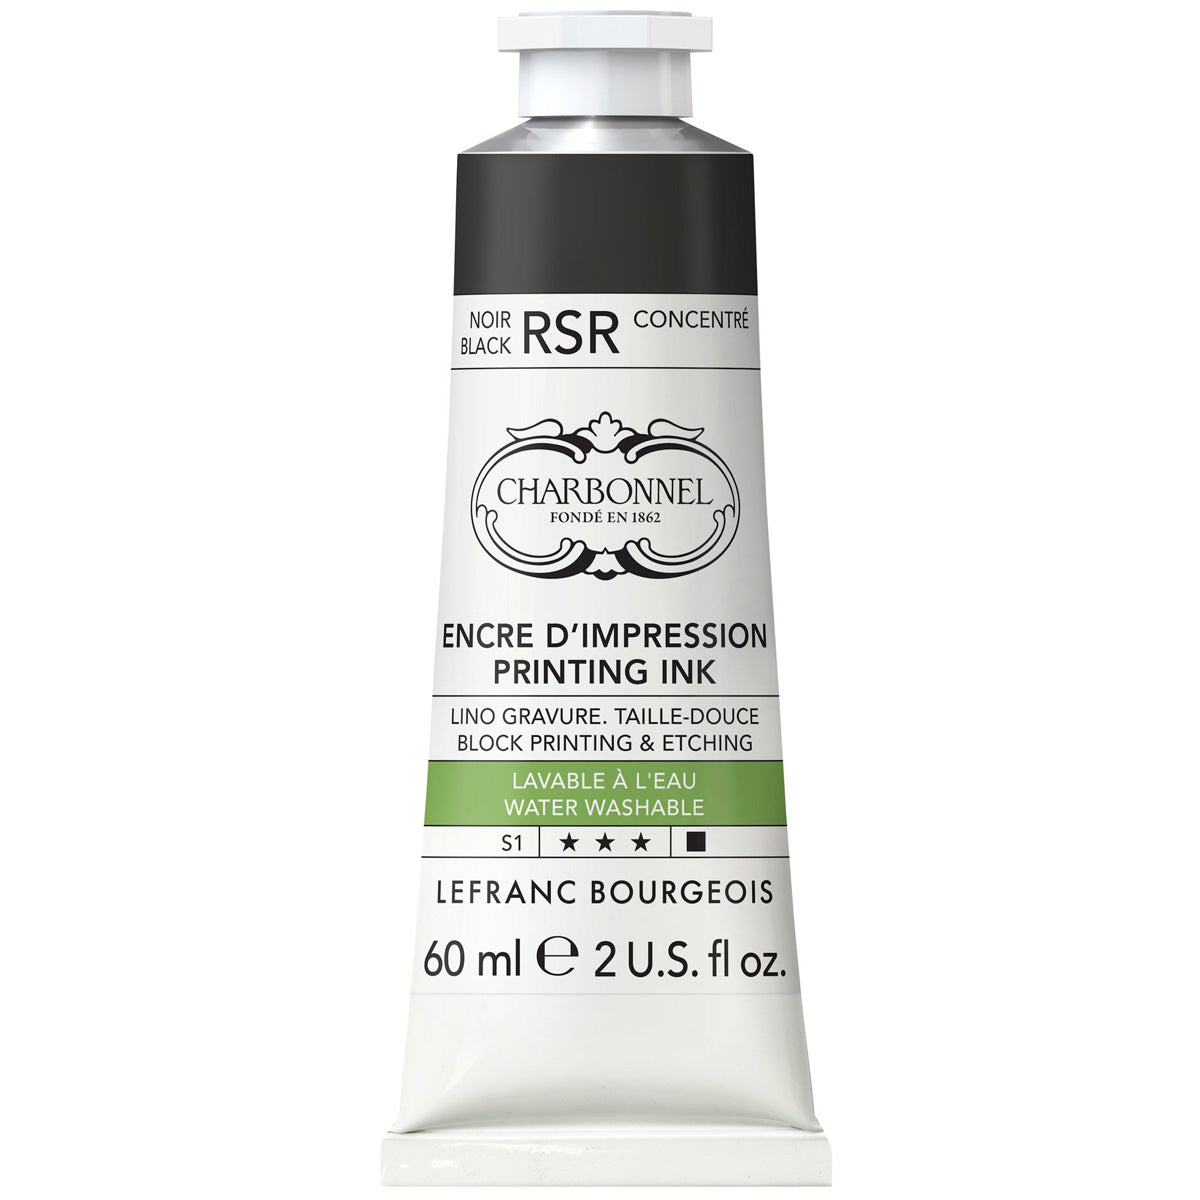 Charbonnel - Aqua Wash - 60 ml Black RSR